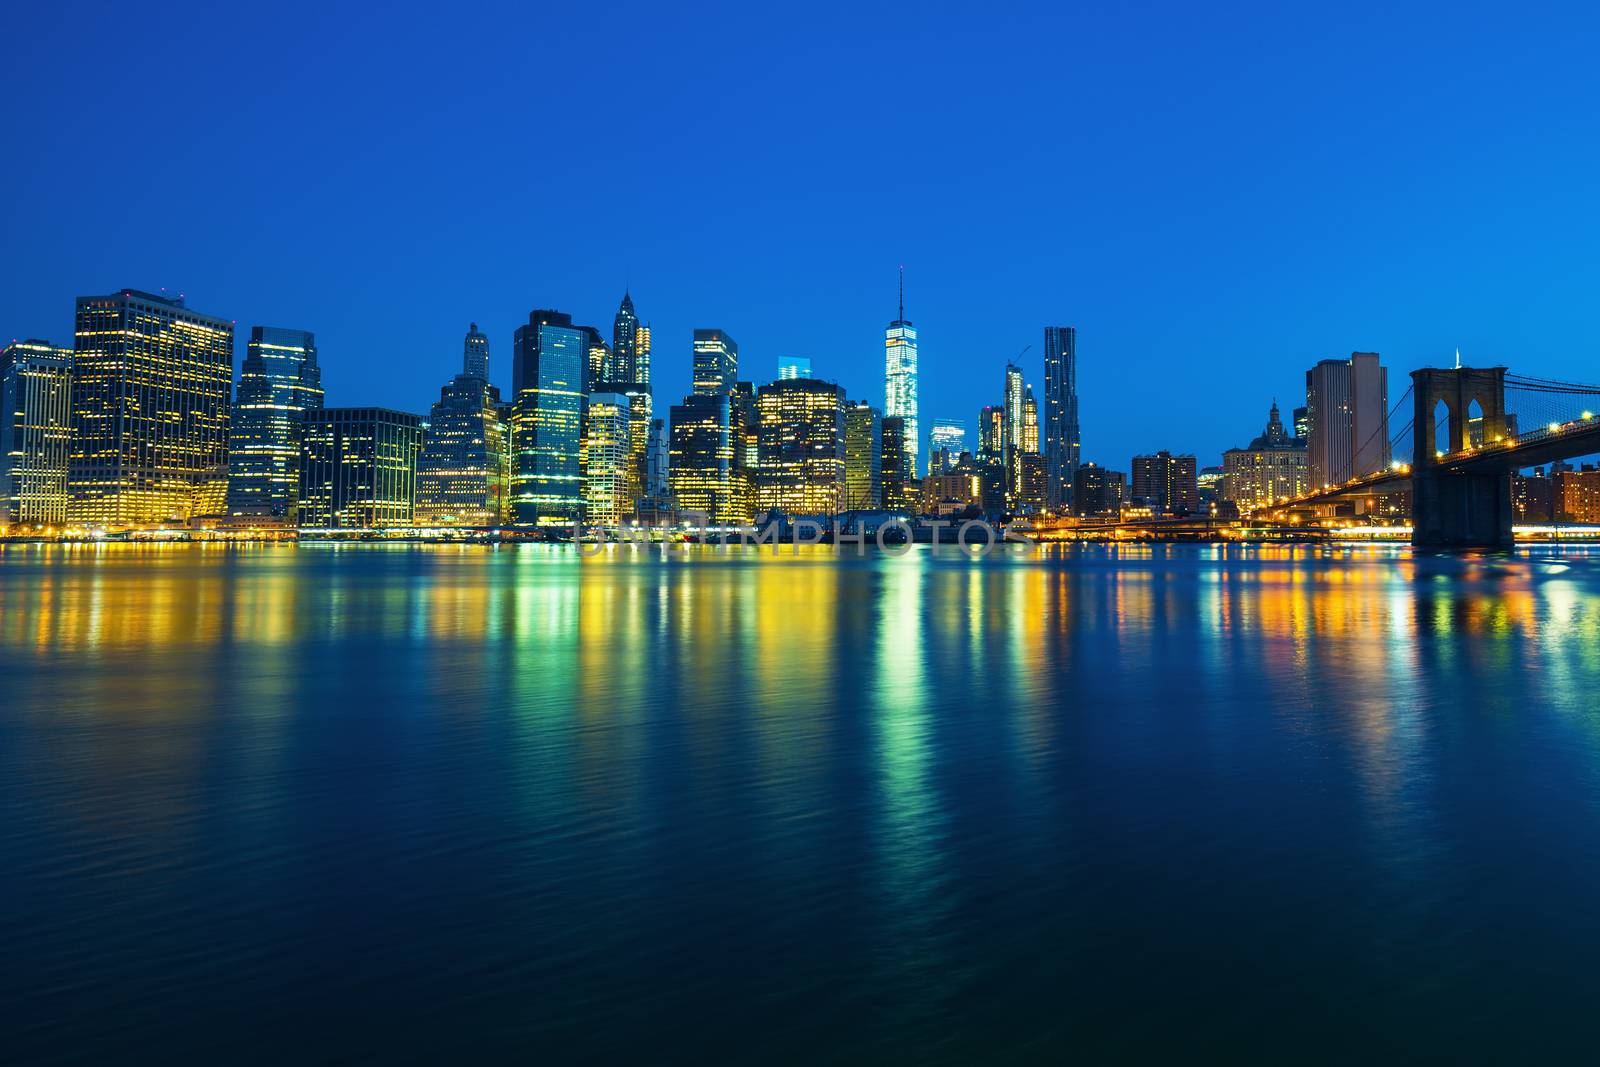 New York City Manhattan midtown at dusk by vwalakte